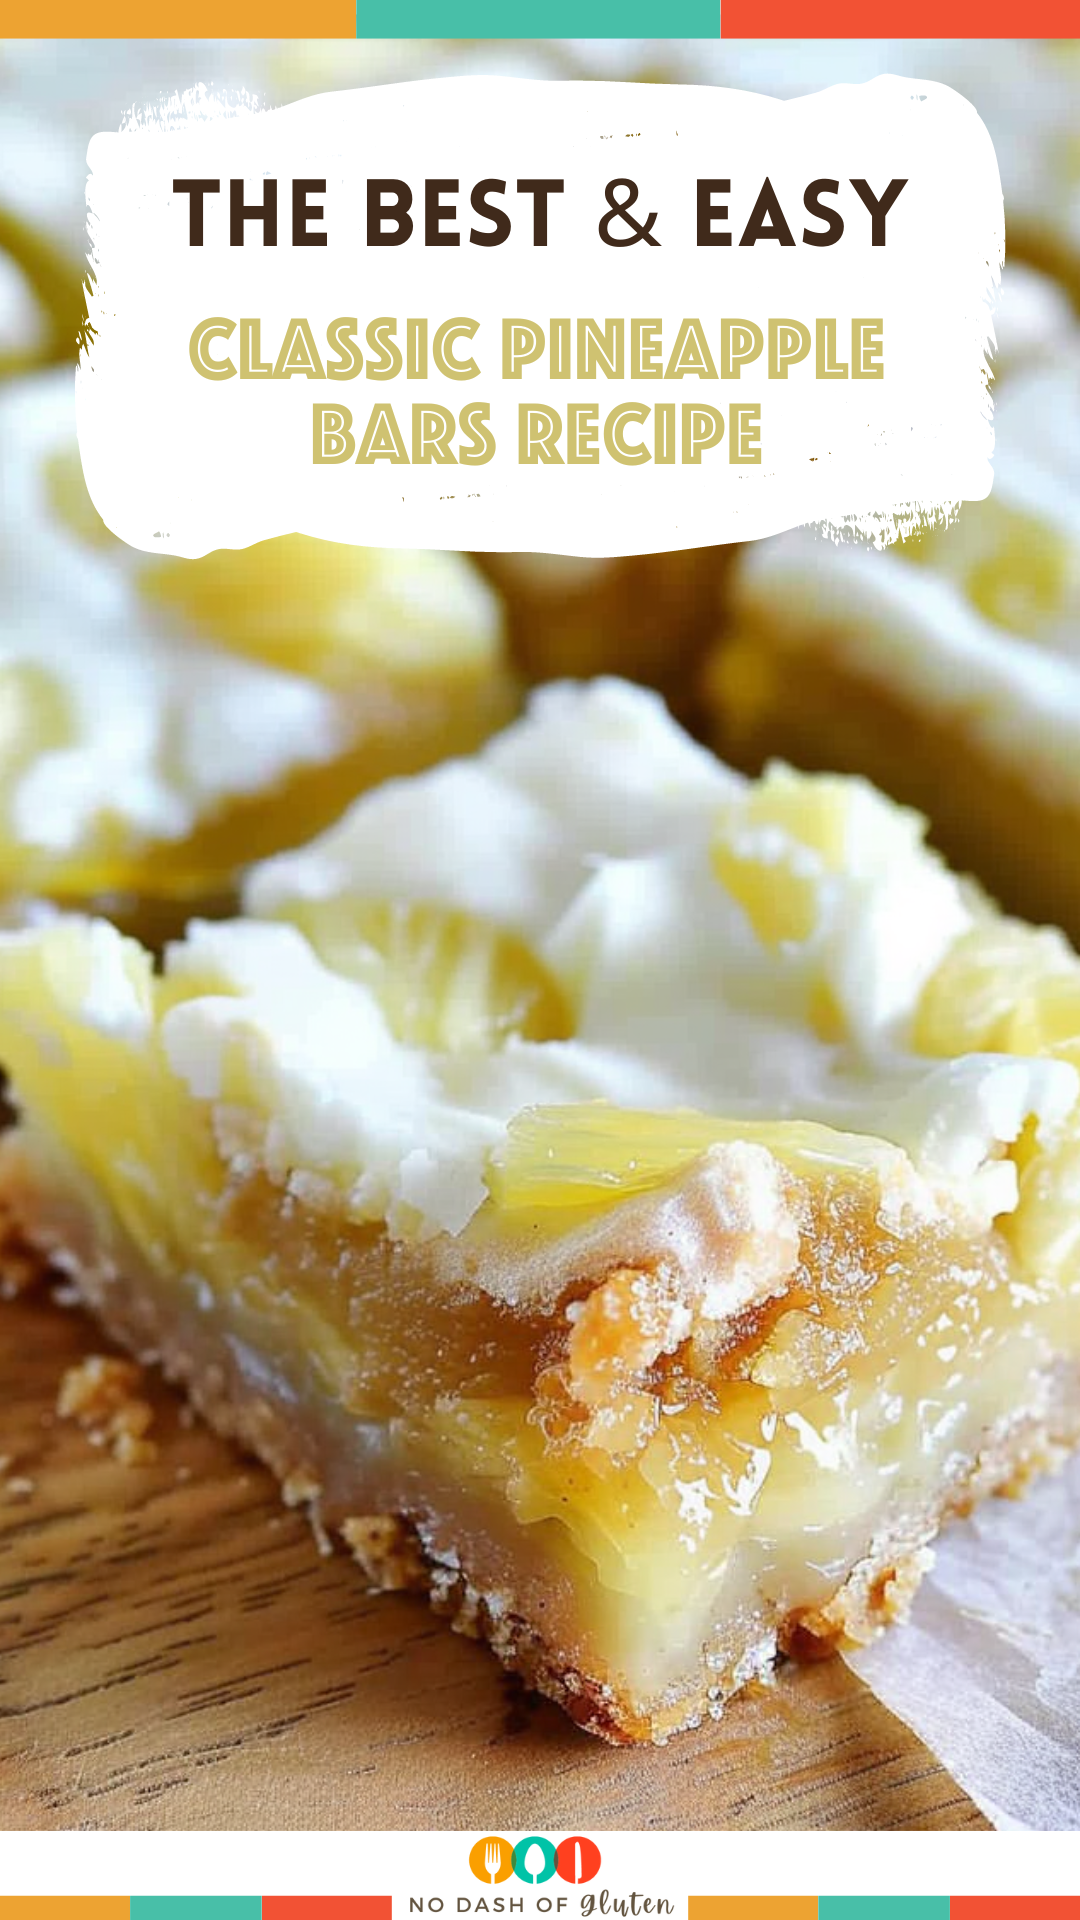 Classic Pineapple Bars Recipe